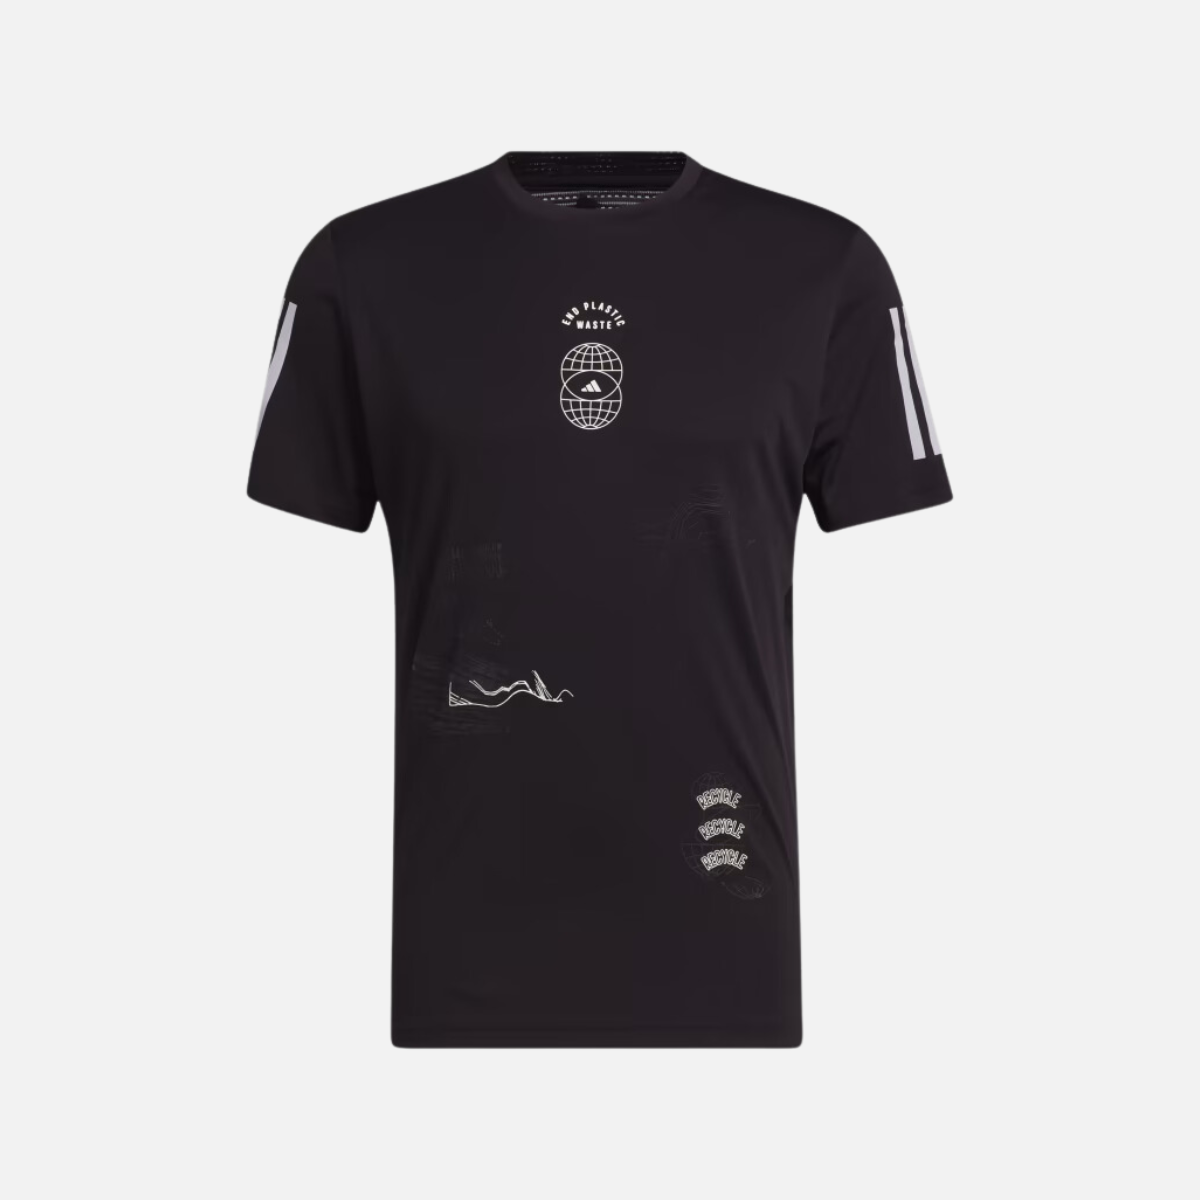 Adidas Global Running Men's Short Sleeve T-shirt -Black